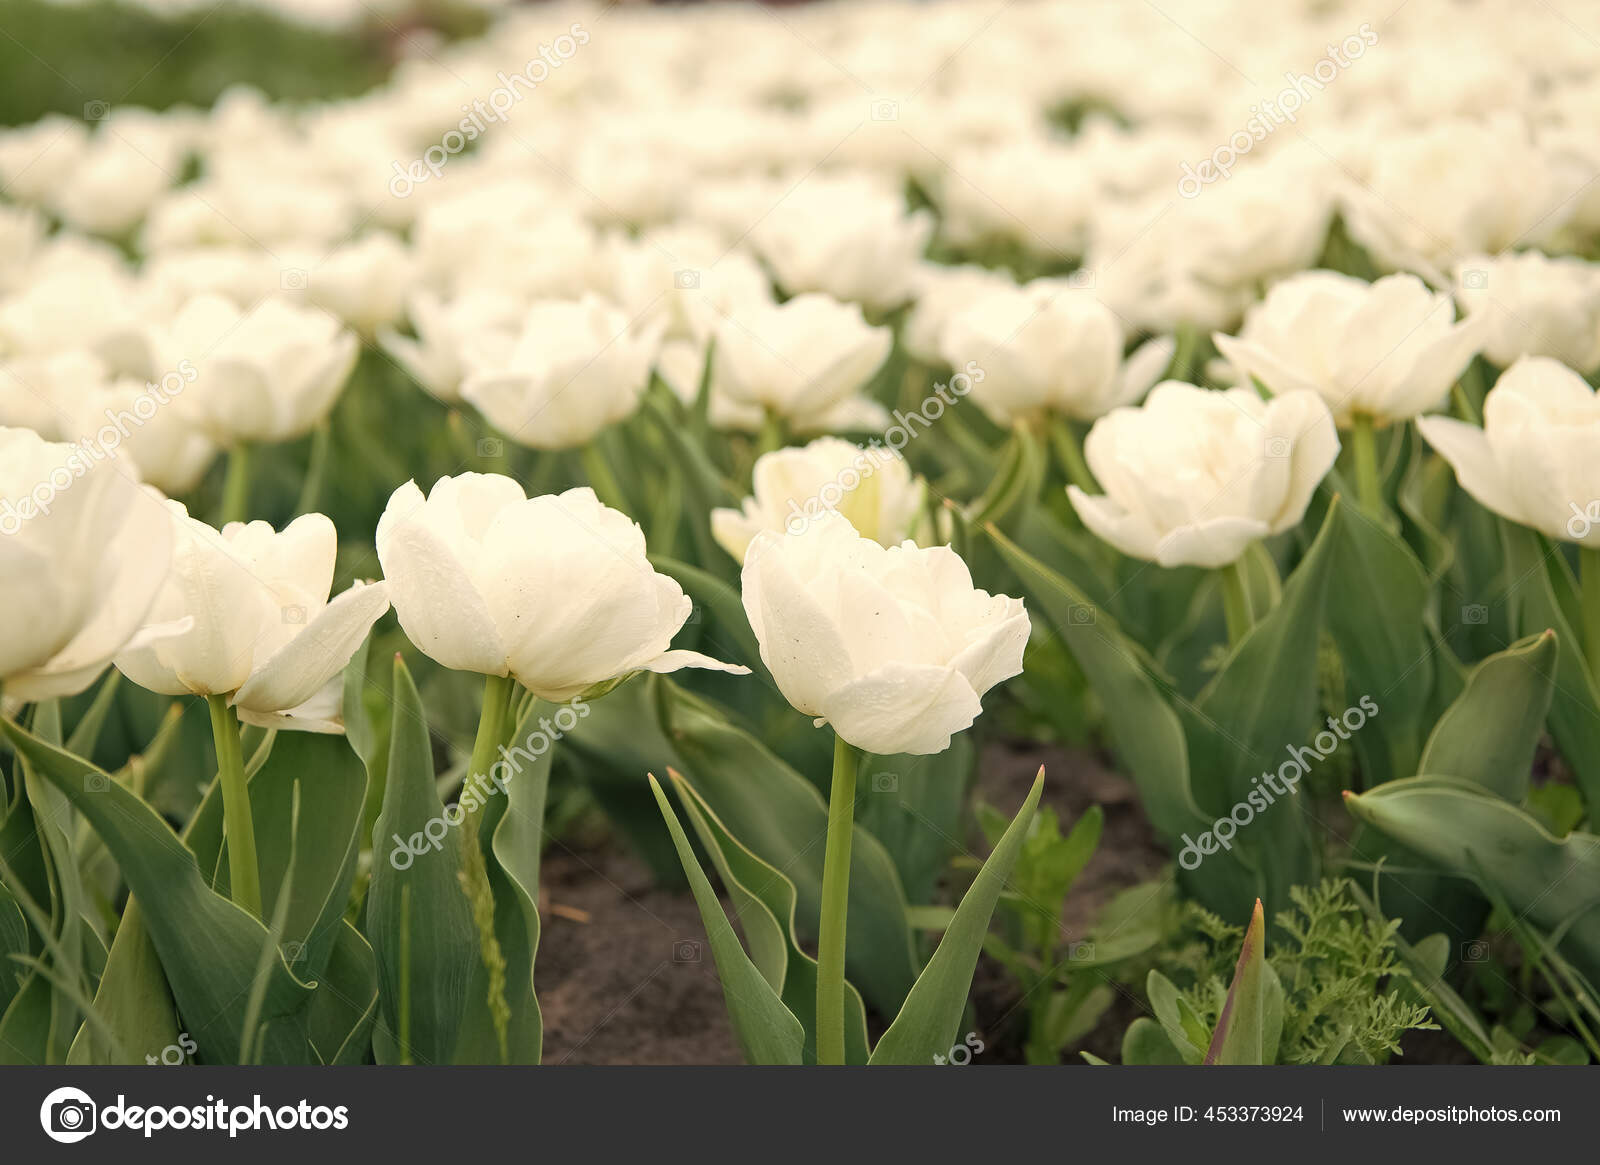 White Tulip Nature